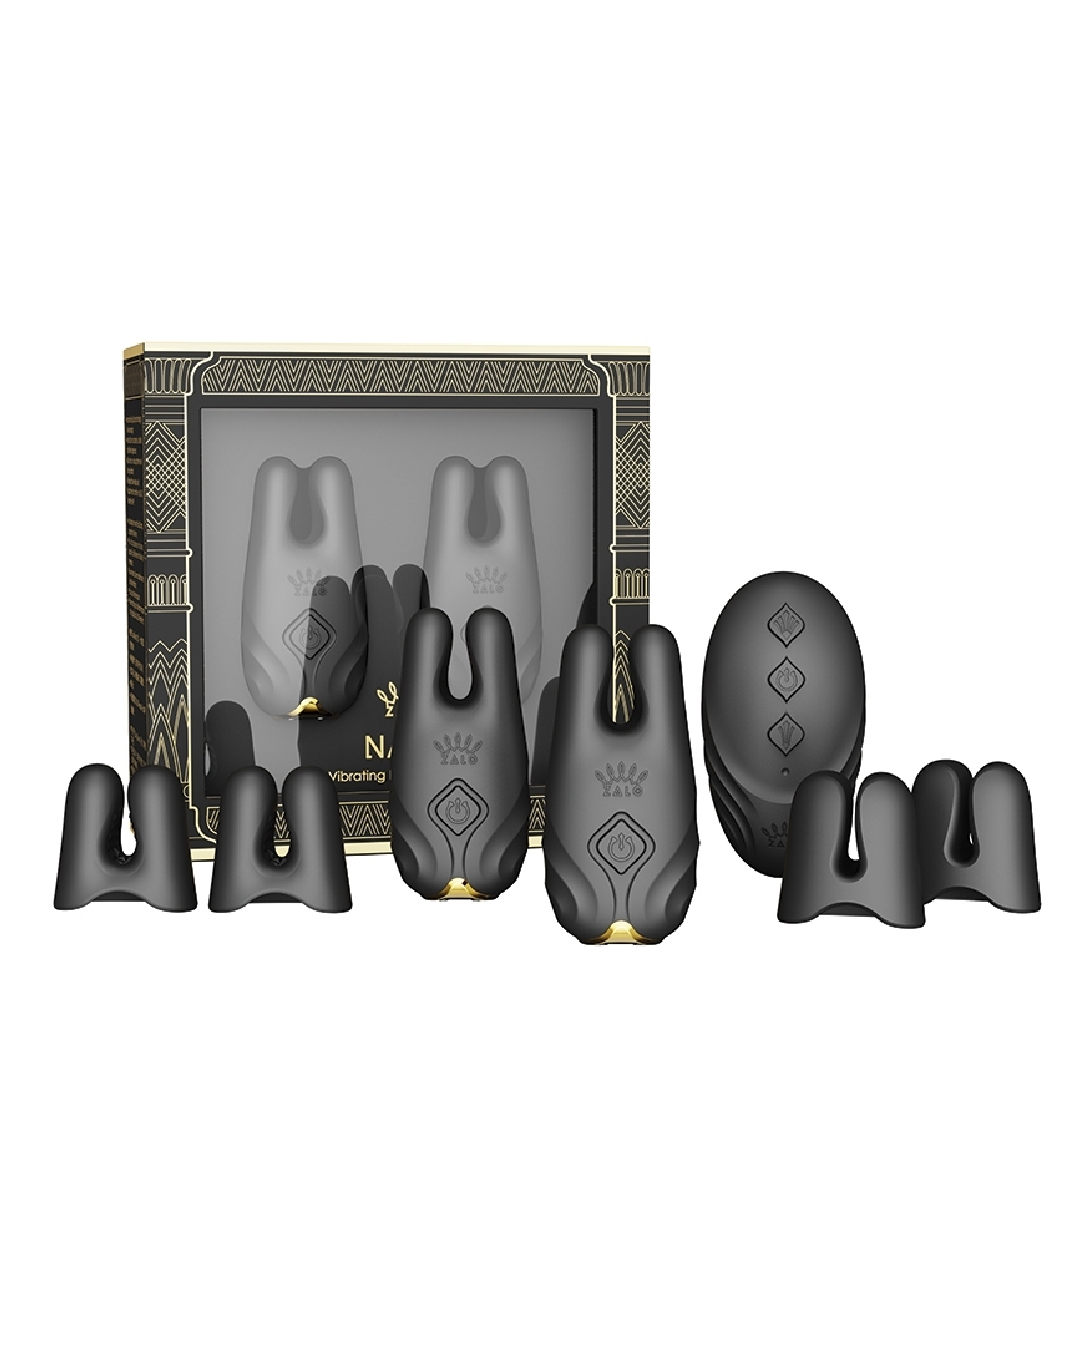 Zalo Nave Vibrating Nipple Clamp Set Black  next to product box 